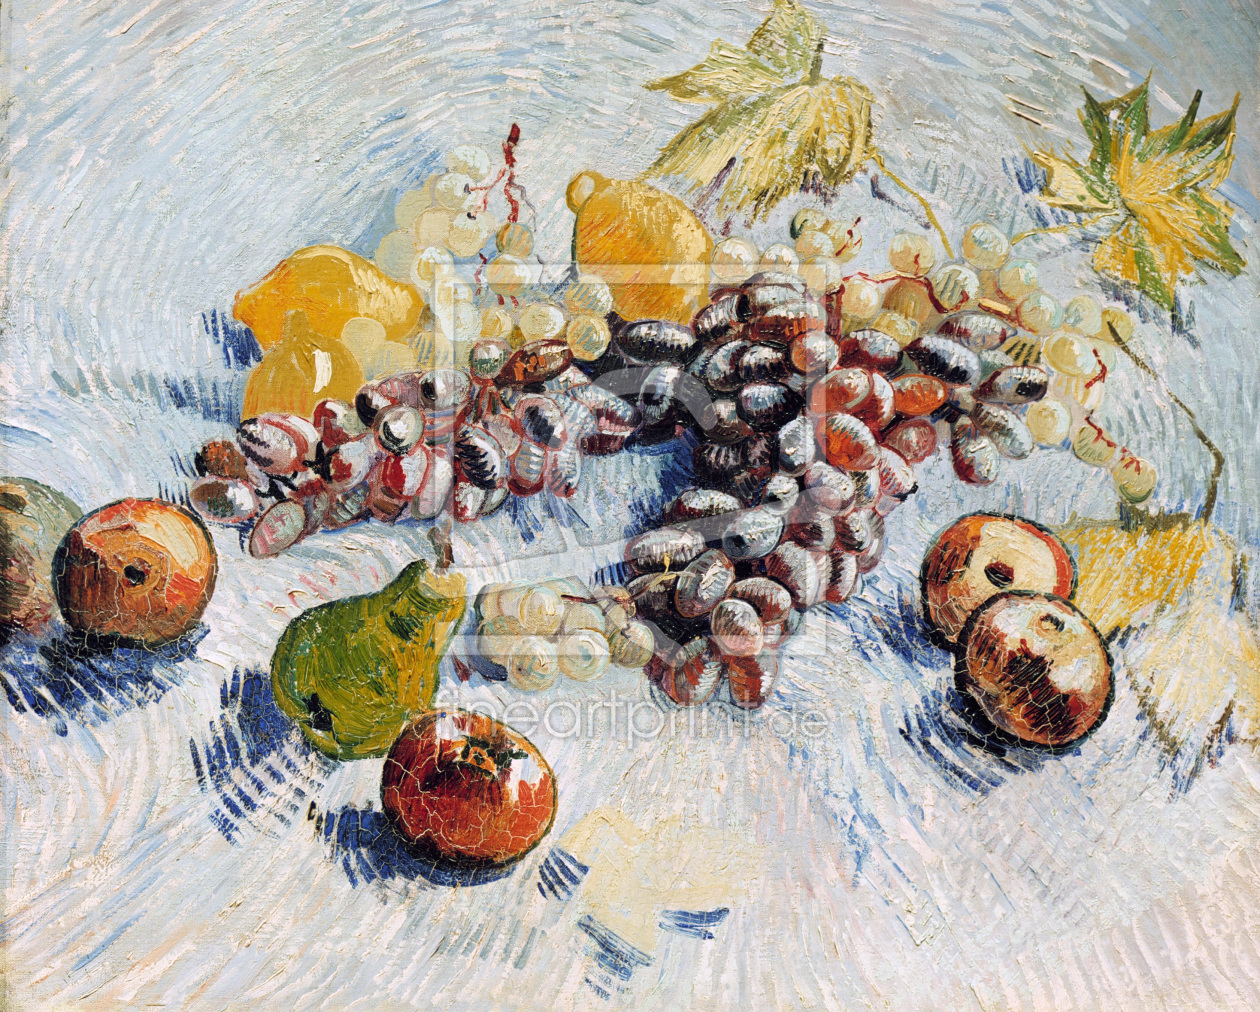 Bild-Nr.: 30003166 v.Gogh /Grapes,Lemons,Pears,Apples /1887 erstellt von van Gogh, Vincent